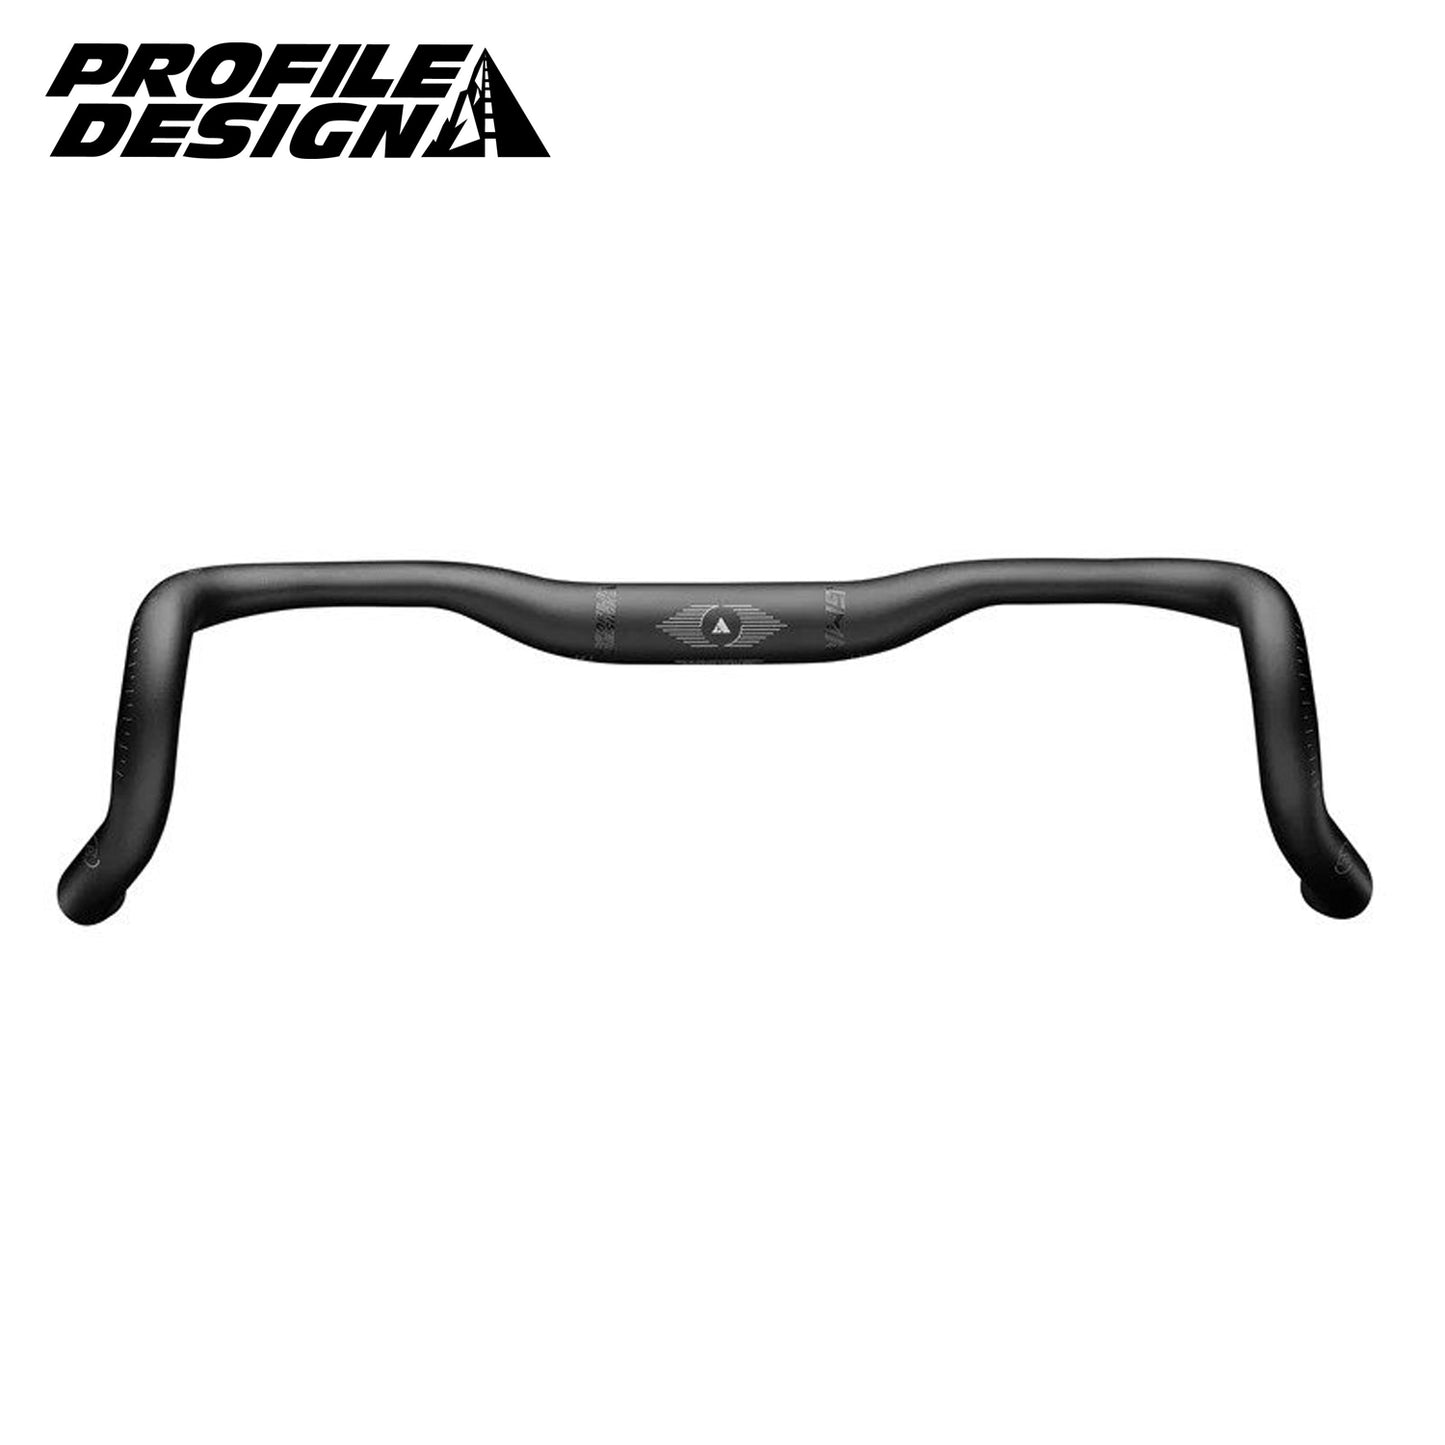 Profile Design DRV/GMR Drop Bar